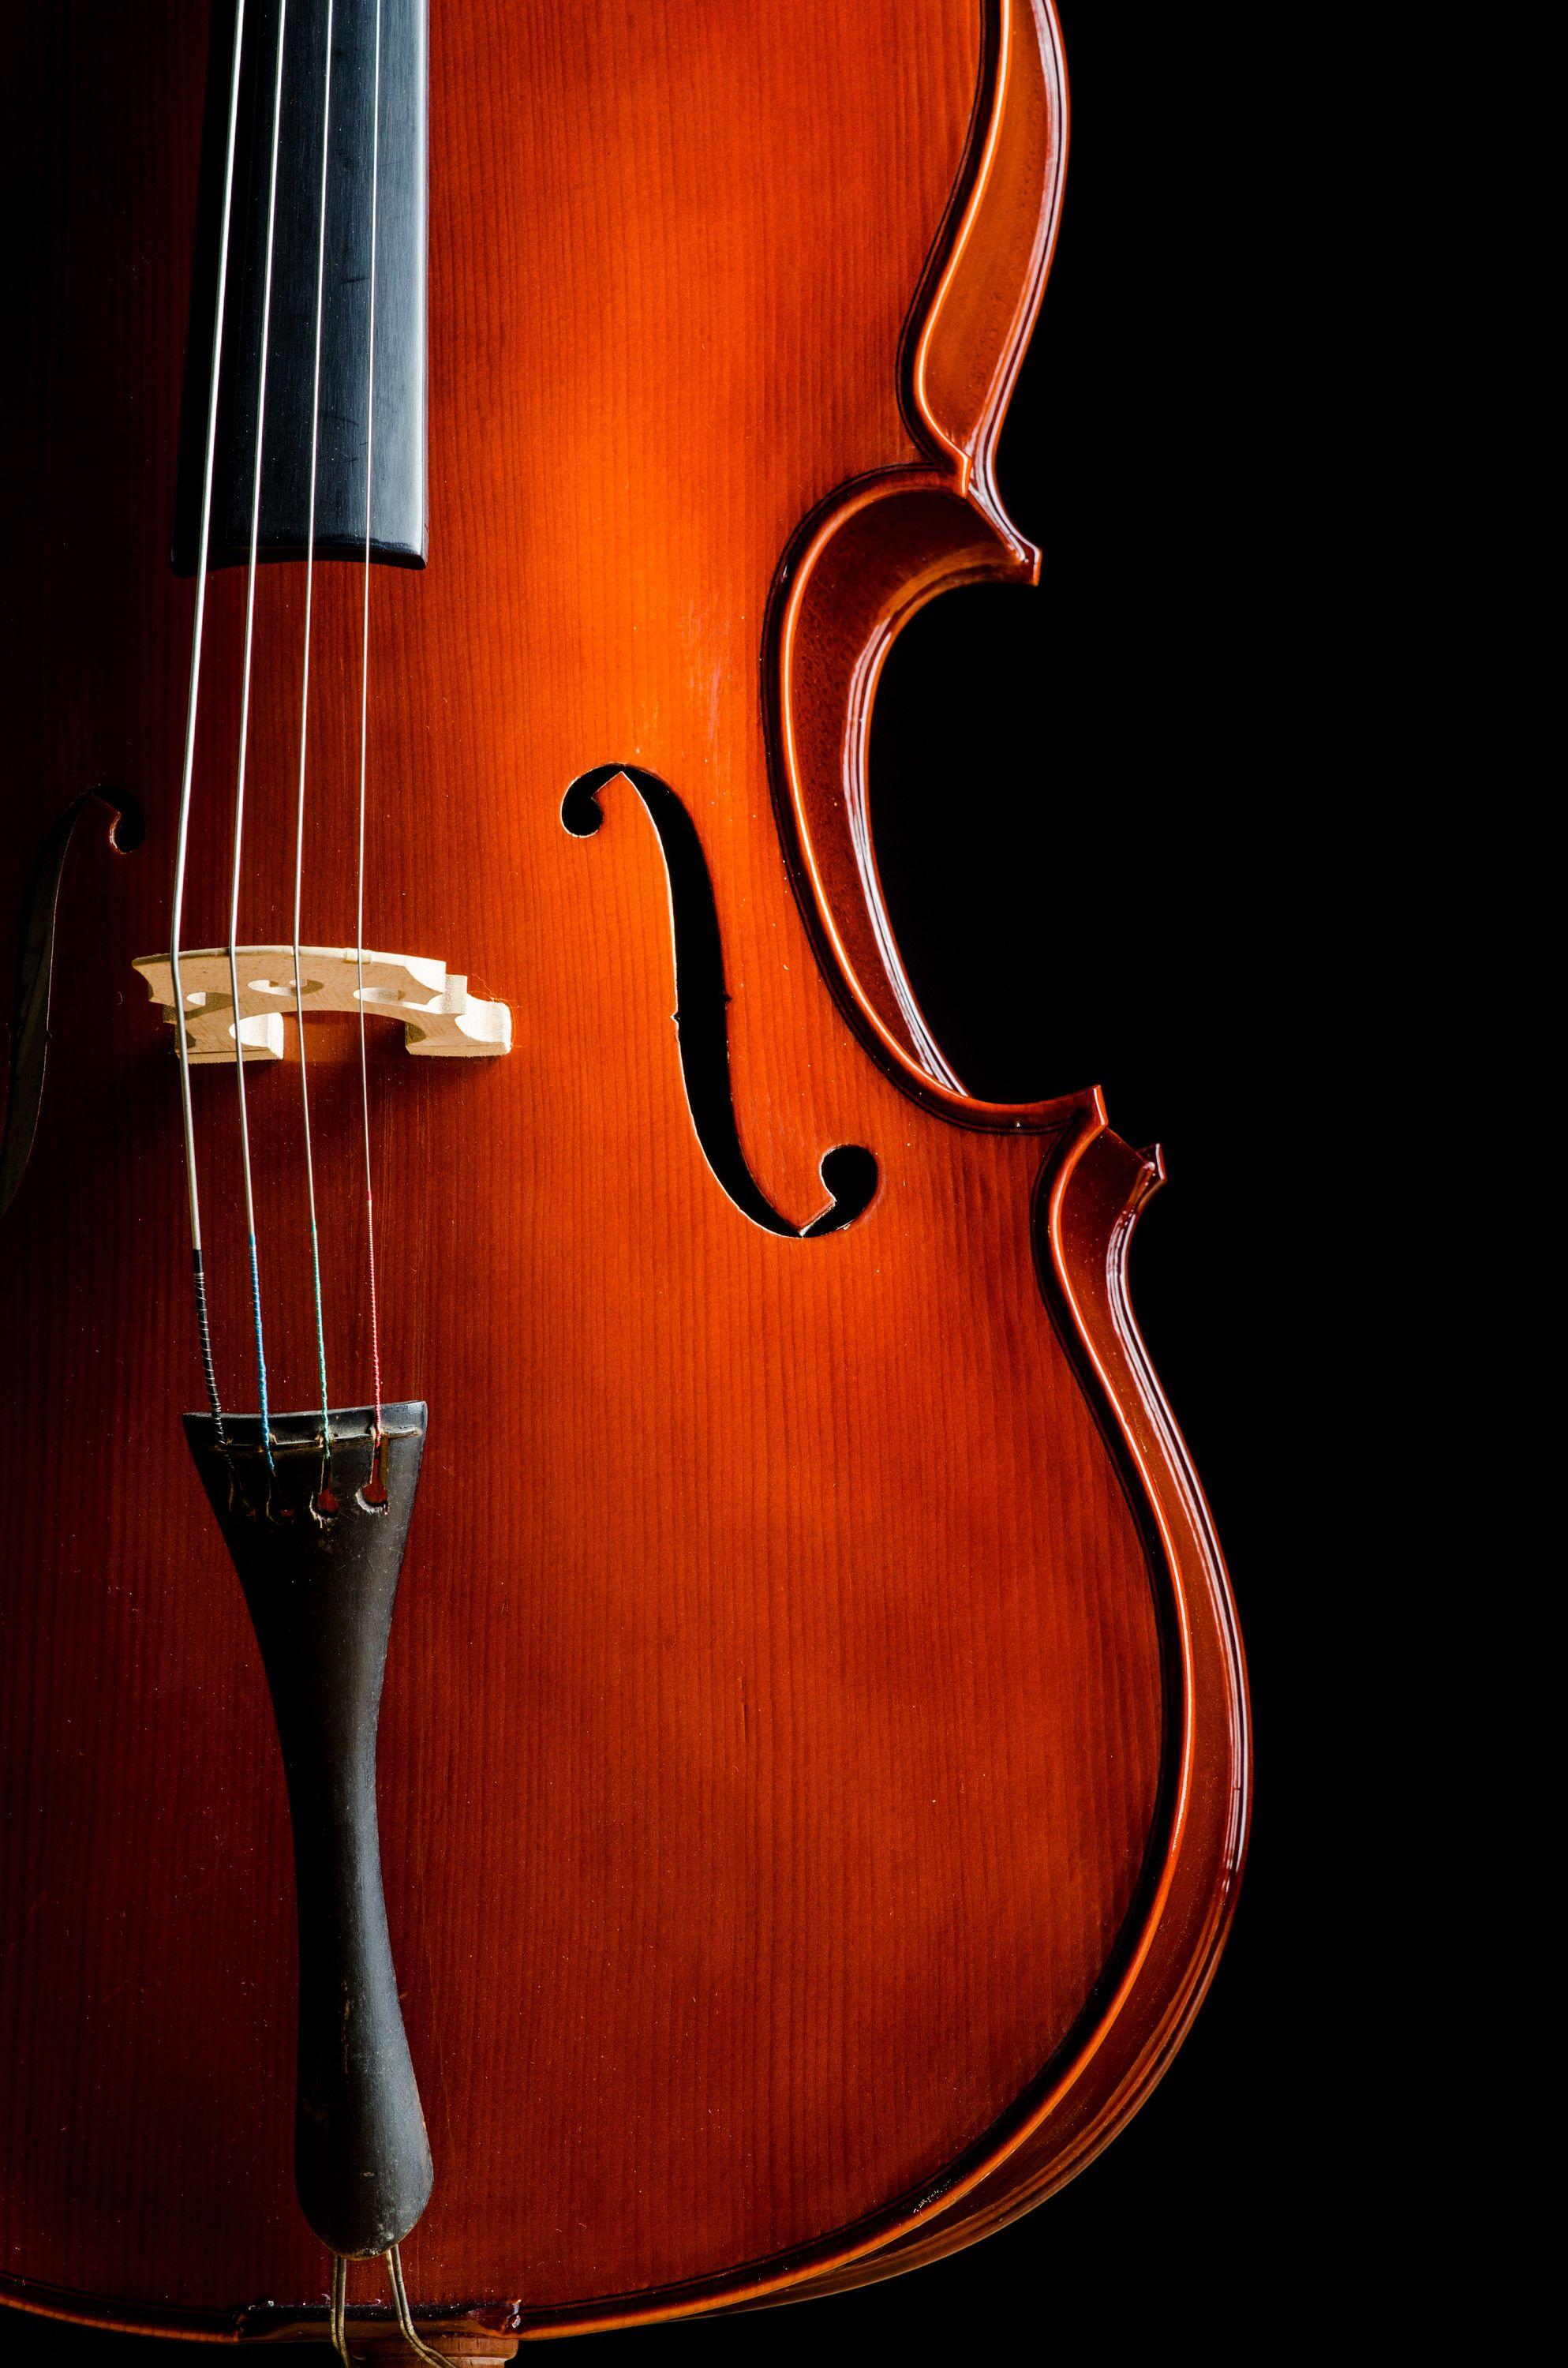 HD Cello Wallpaper and Photo. View HD Widescreen Wallpaper